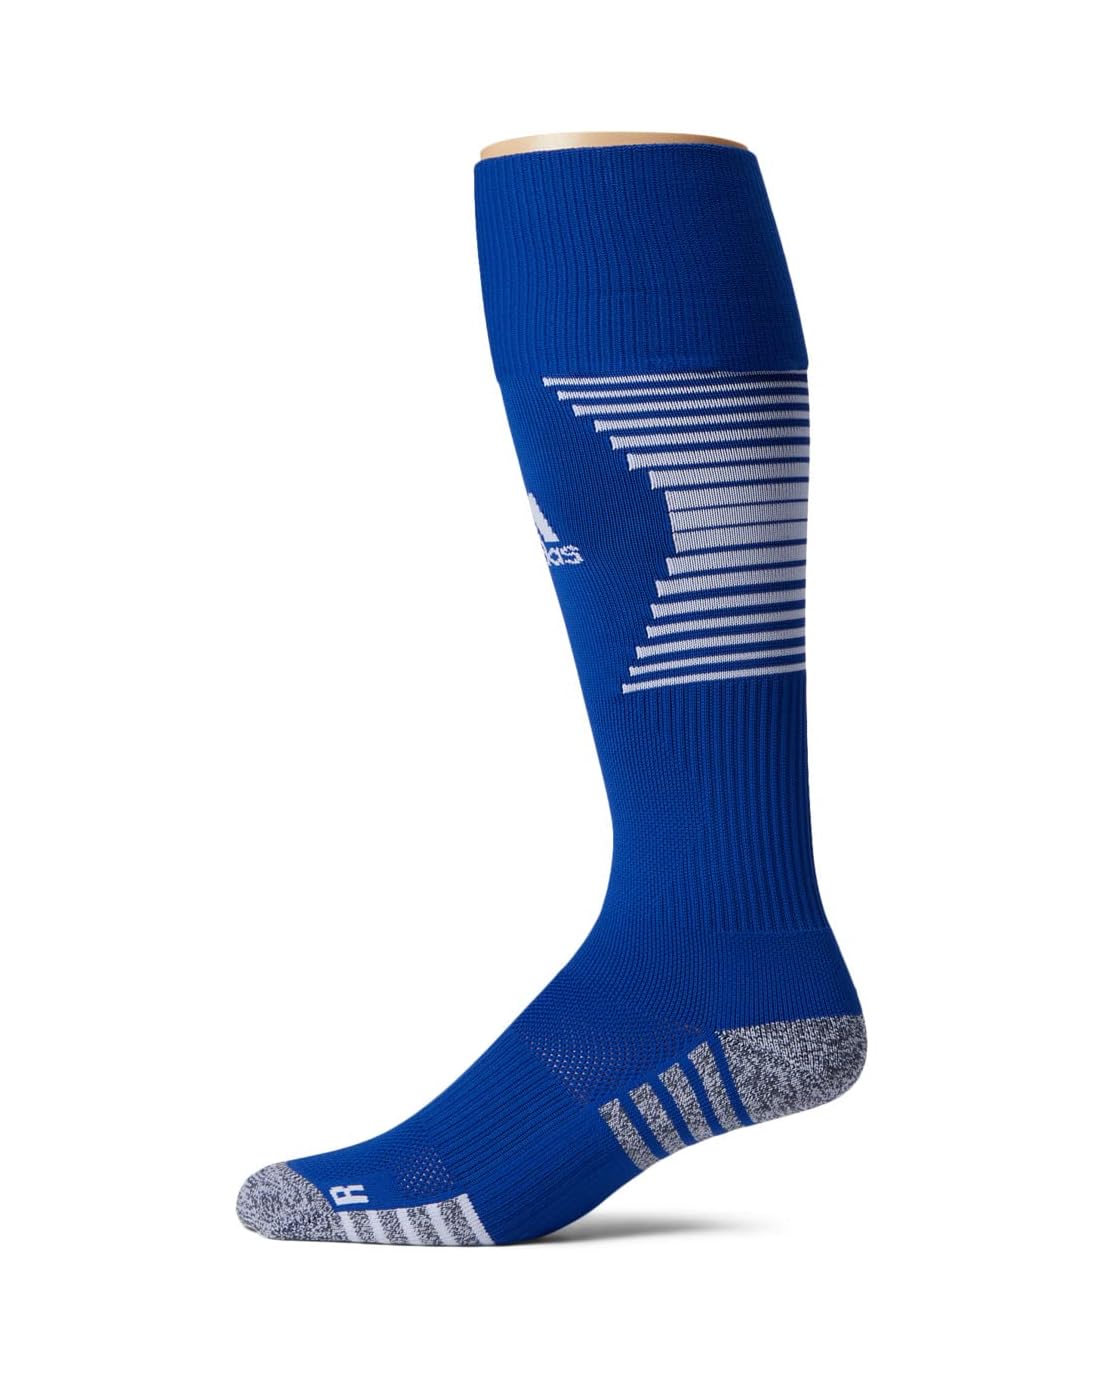 Adidas Team Speed 3 Soccer Socks 1-Pair